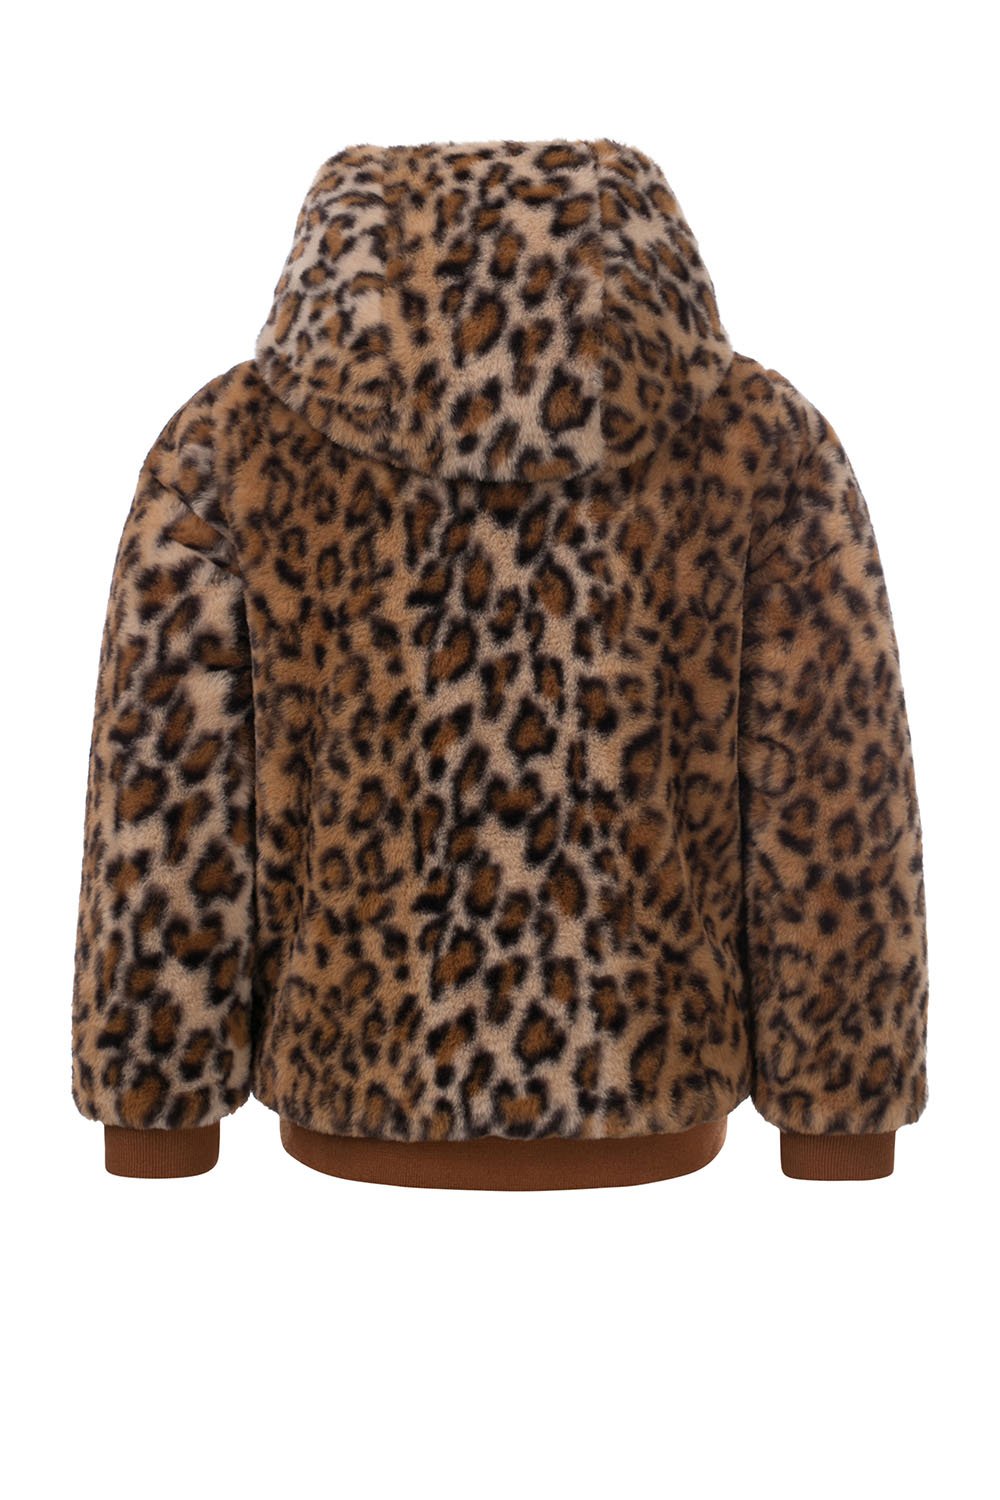 Meisjes Little jacket animal fur reversible van LOOXS Little in de kleur Animal Fur in maat 128.